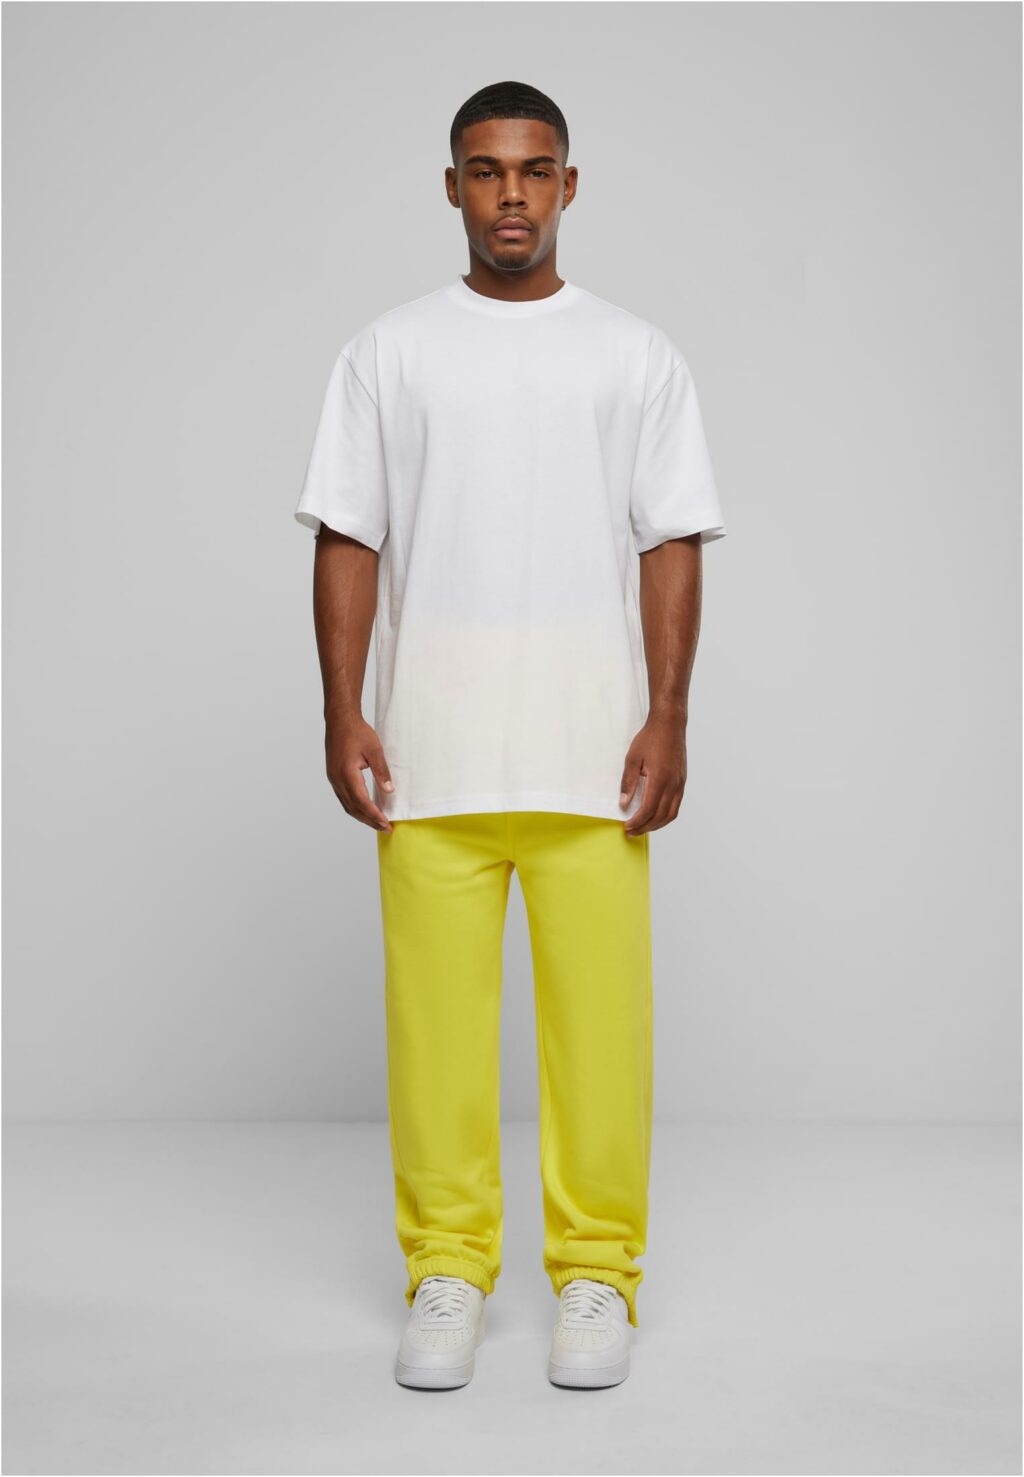 Urban Classics Sweatpants yellow TB014B